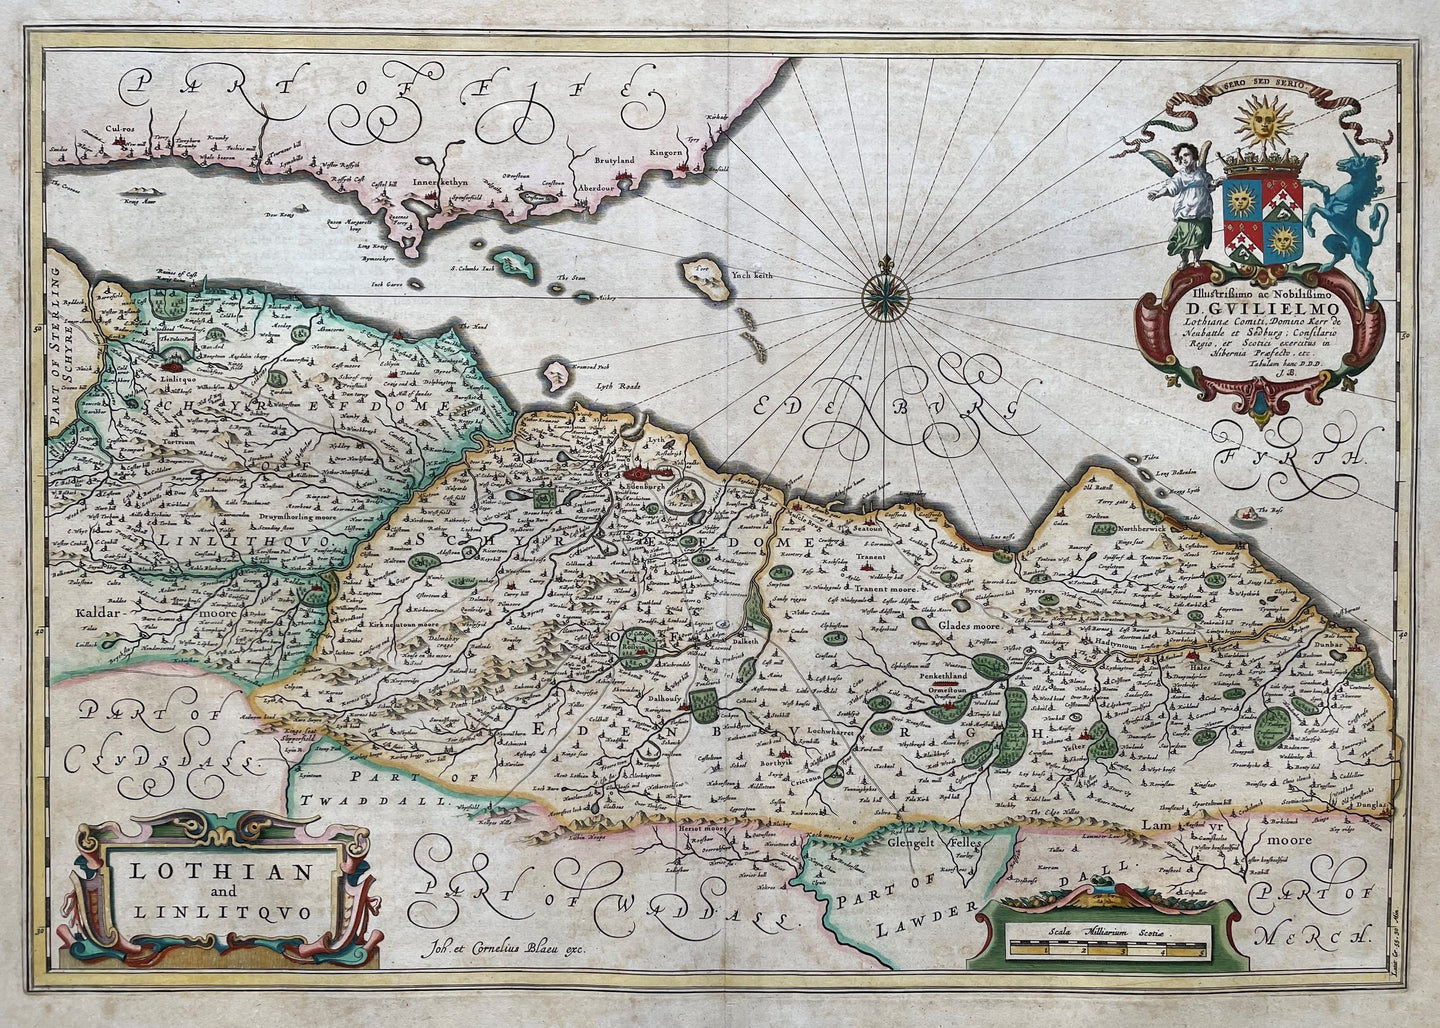 Schotland Lothian Edinburgh British Isles Scotland - J Blaeu - circa 1659